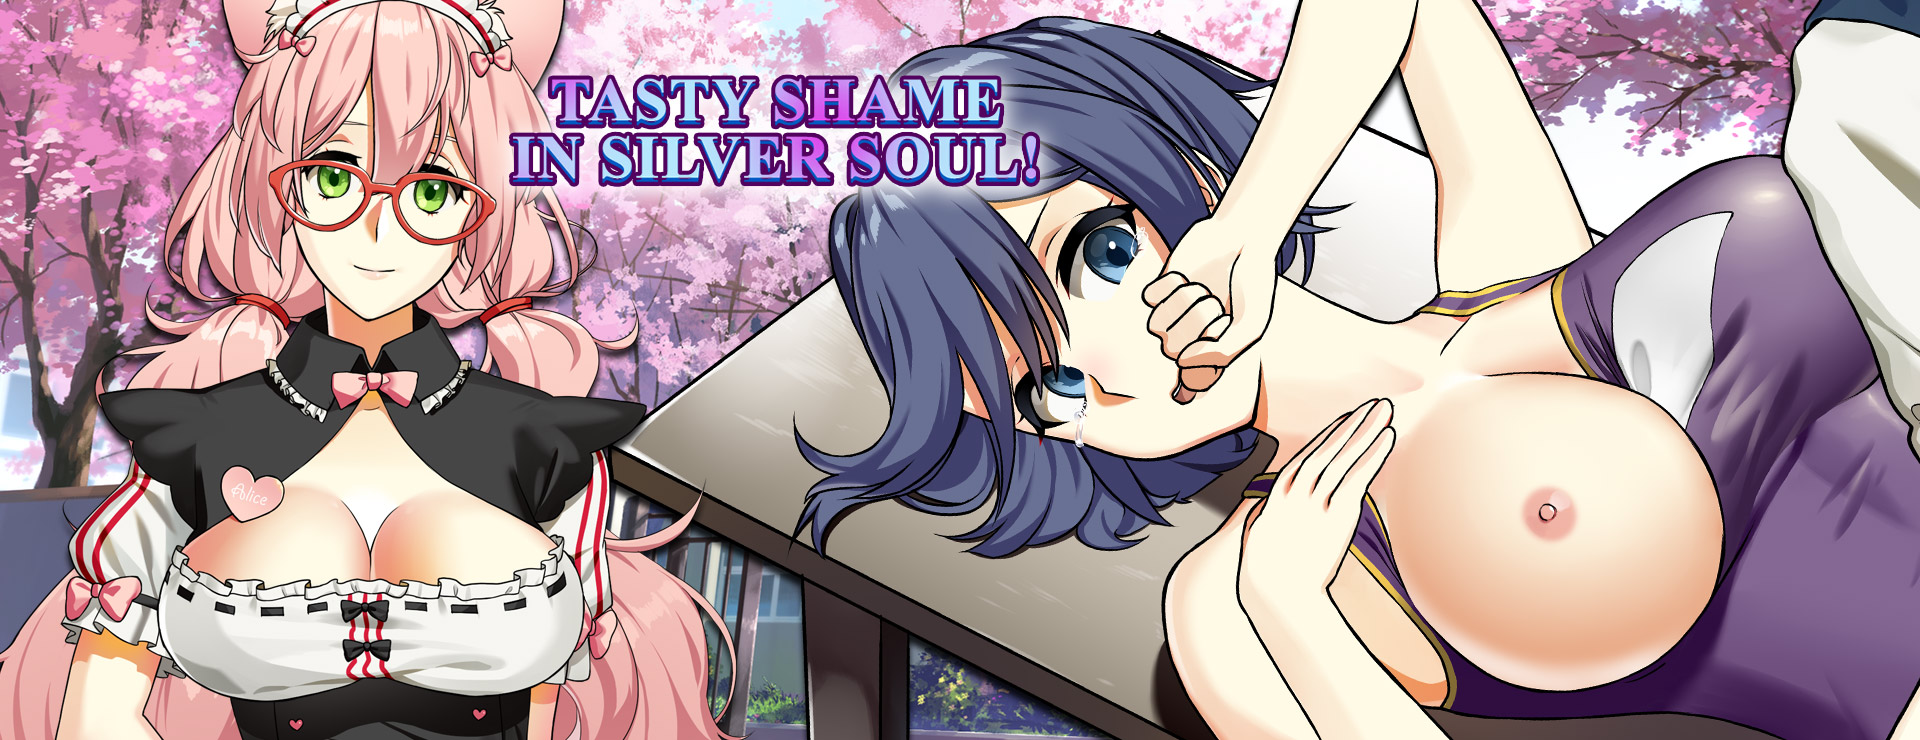 Tasty Shame in Silver Soul - Visual Novel Game